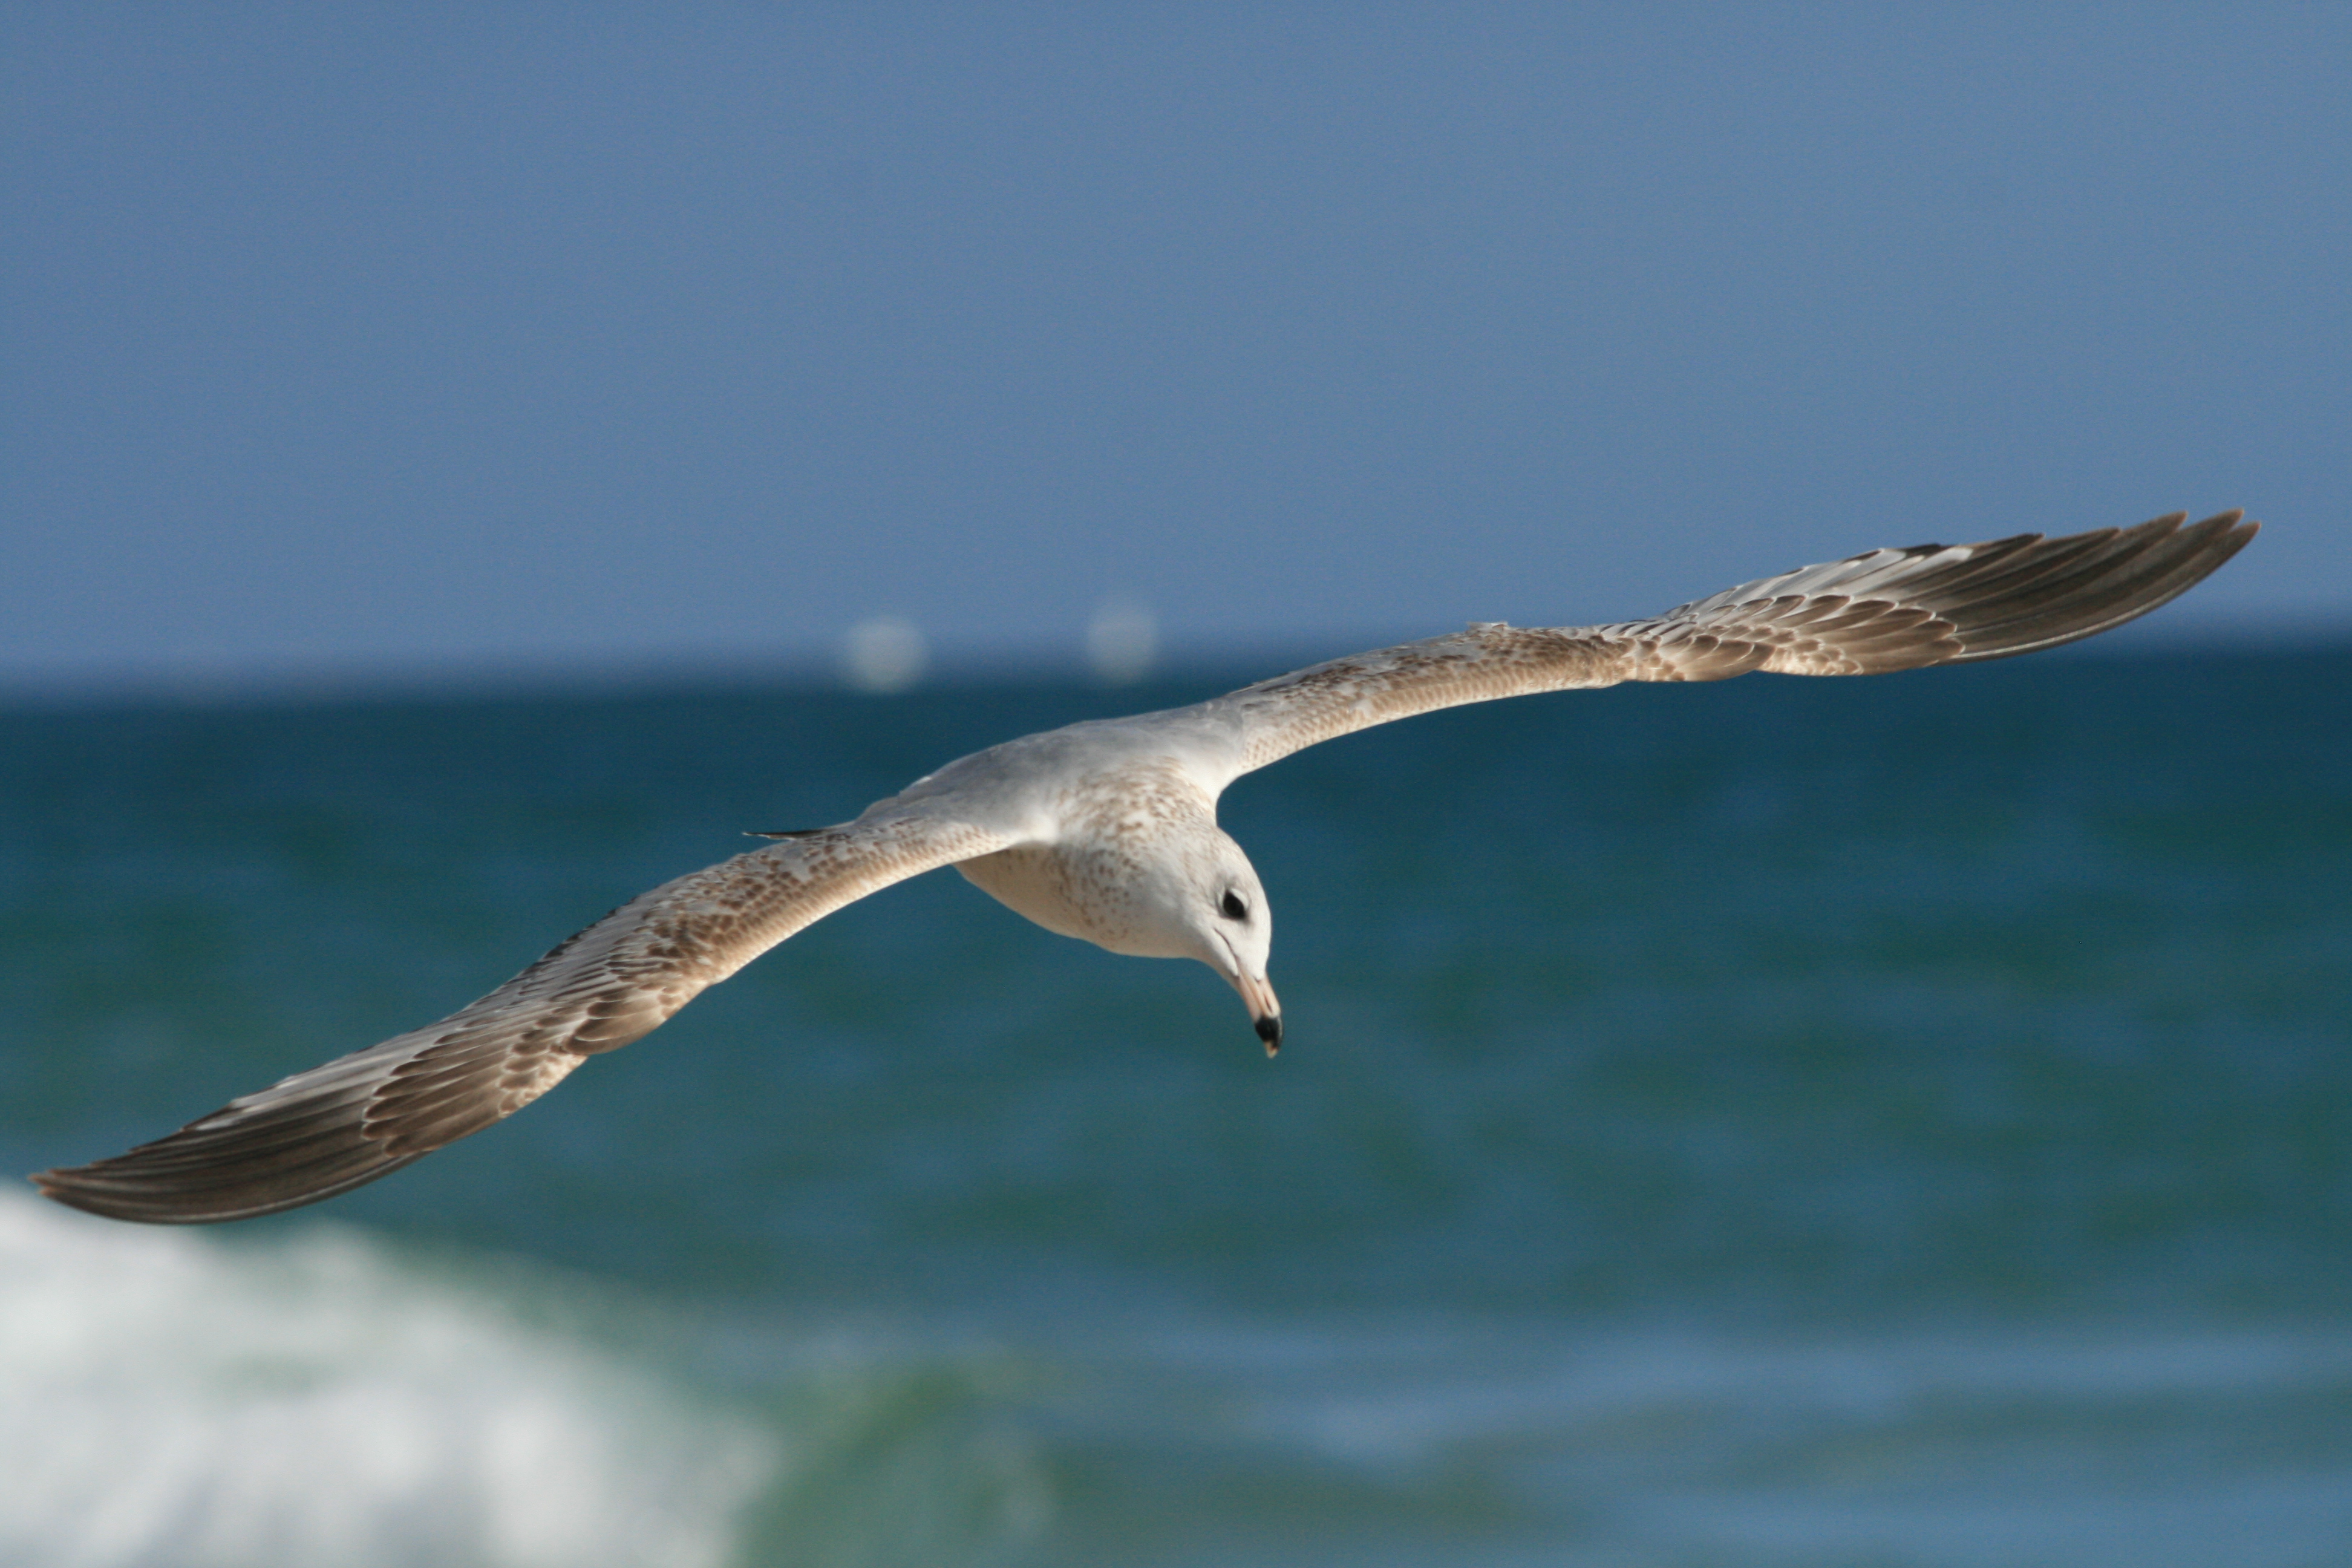 File:Seagull in flight on Florida beach 2.JPG - Wikimedia Commons